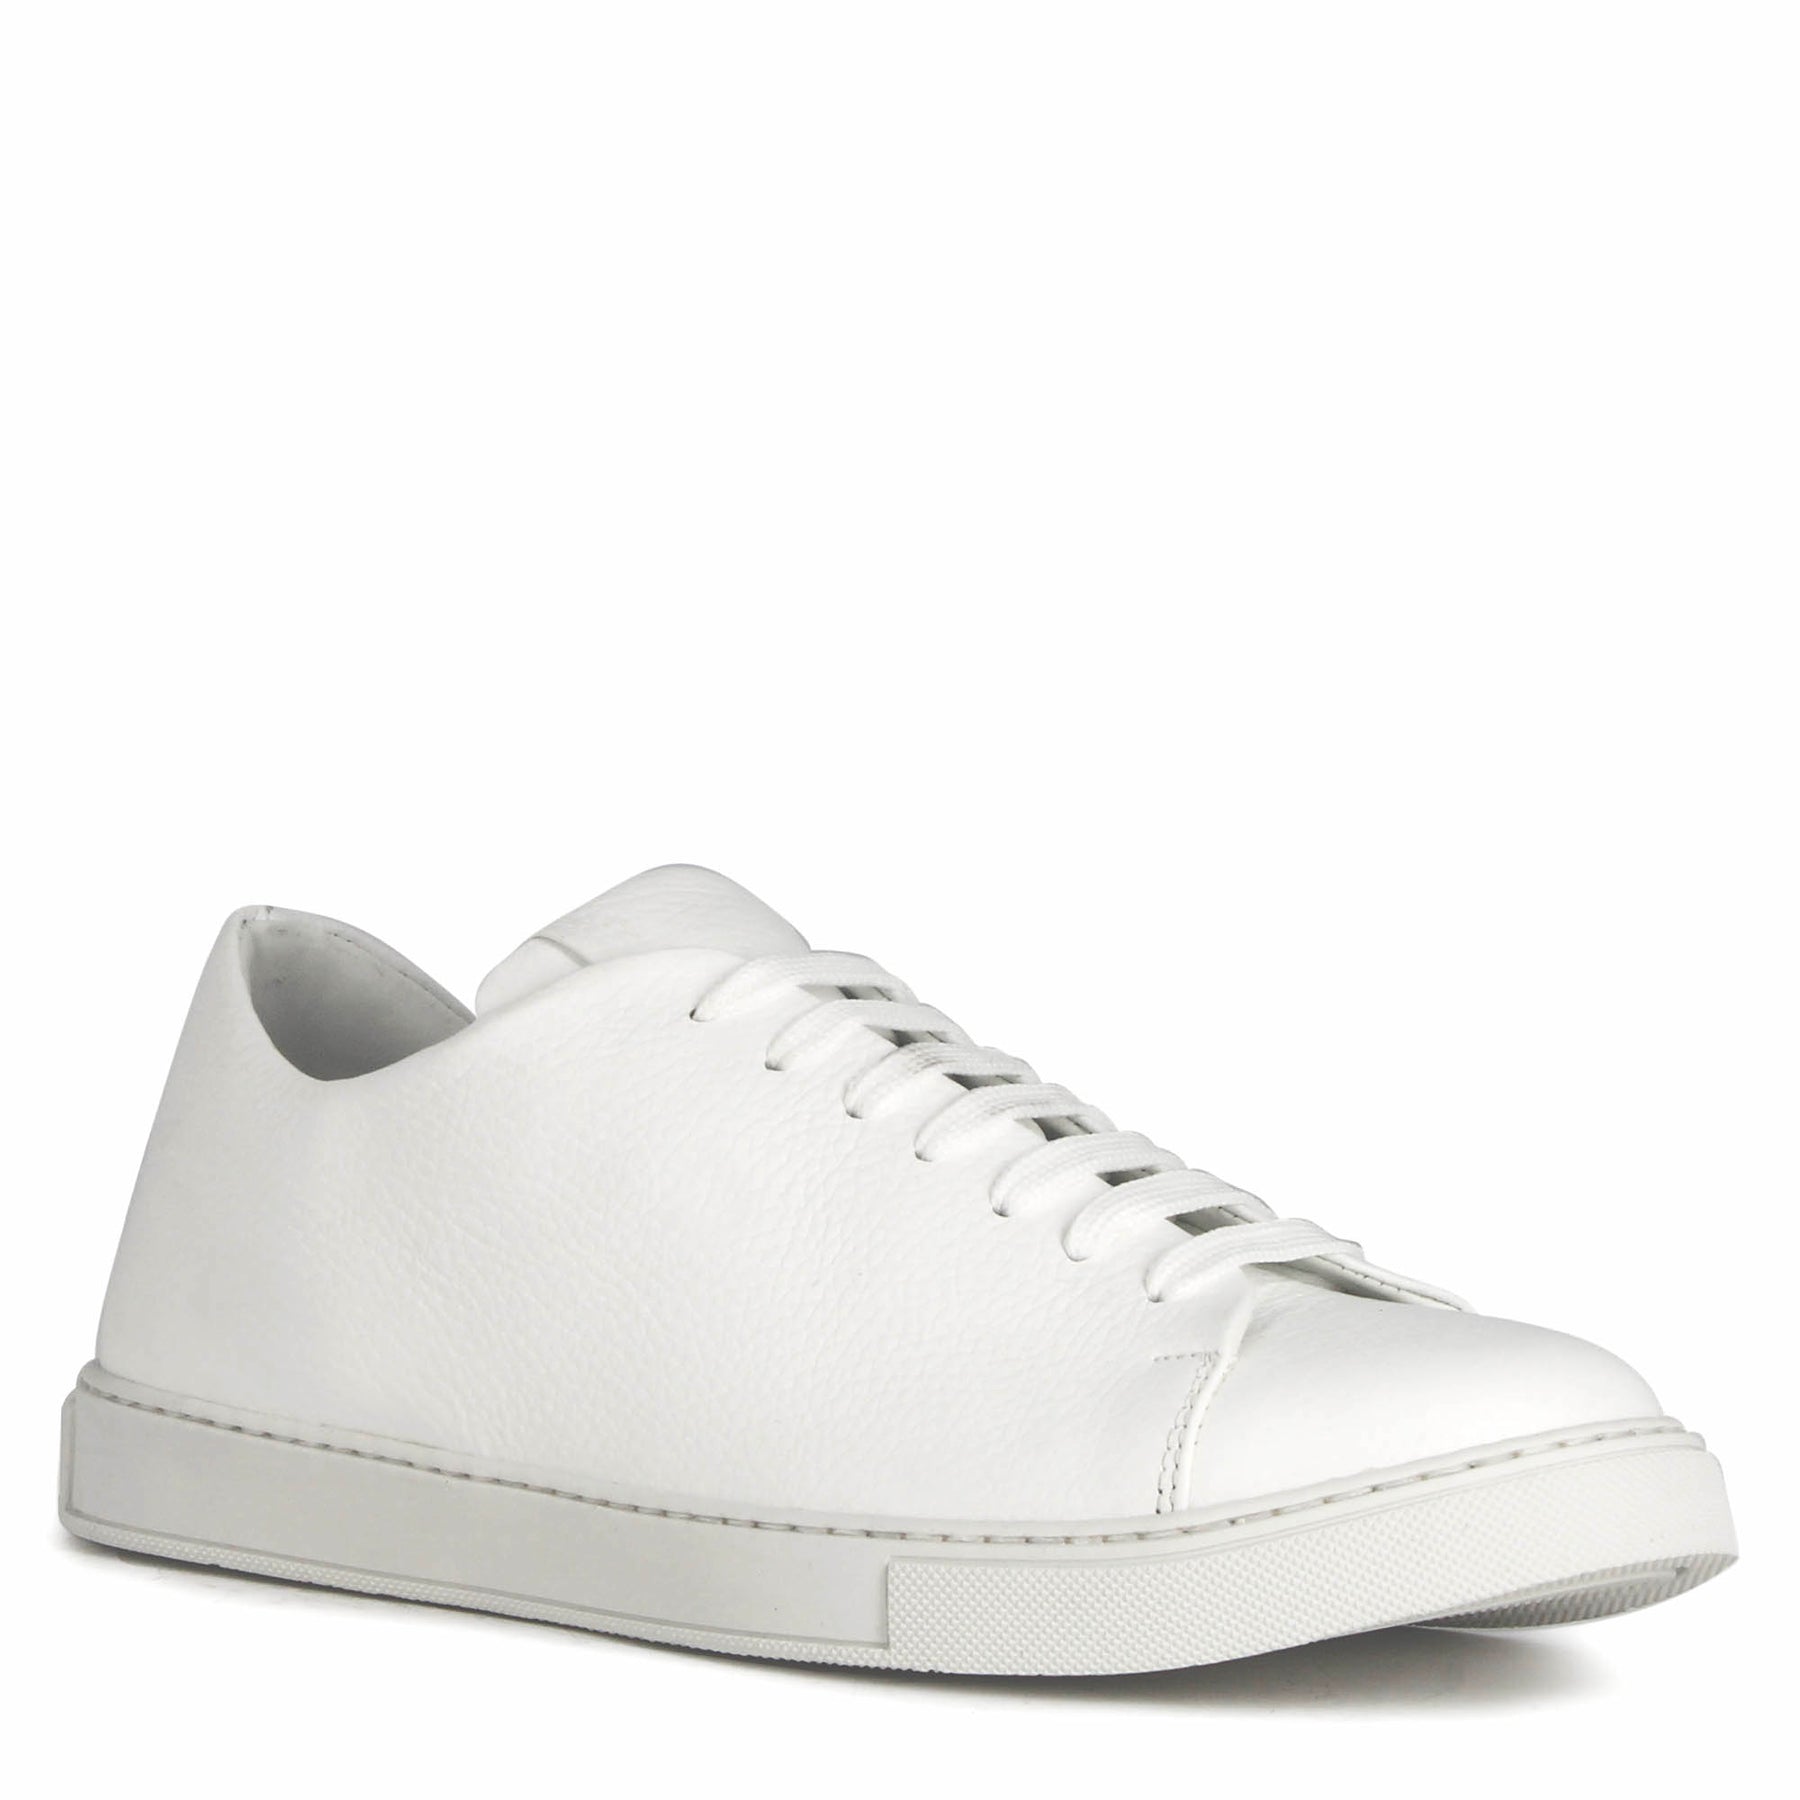 Classic men's sneaker in white leather